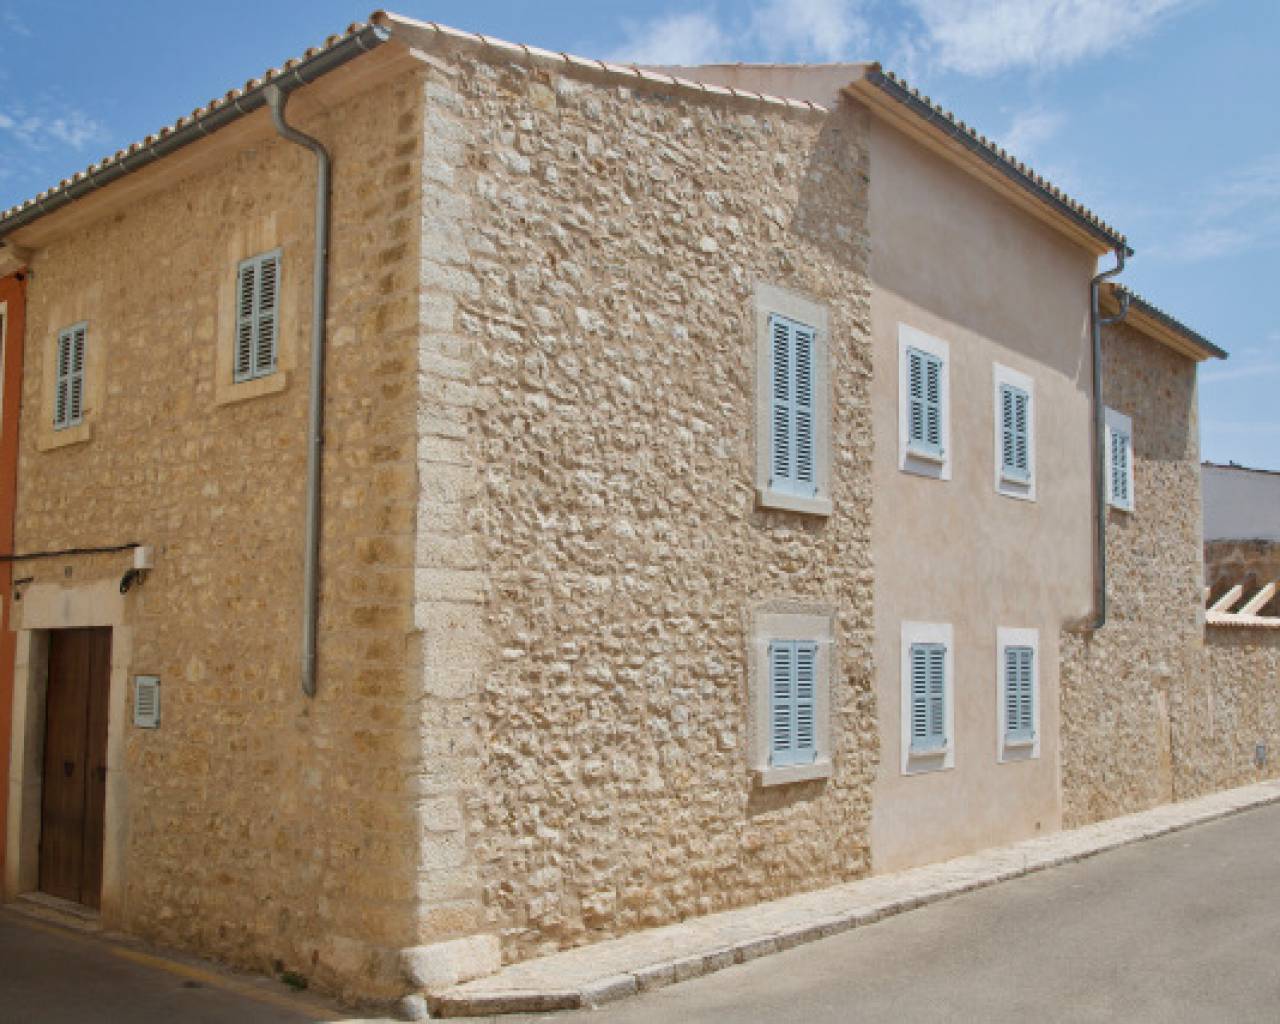 Property for rent Binissalem,Mallorca